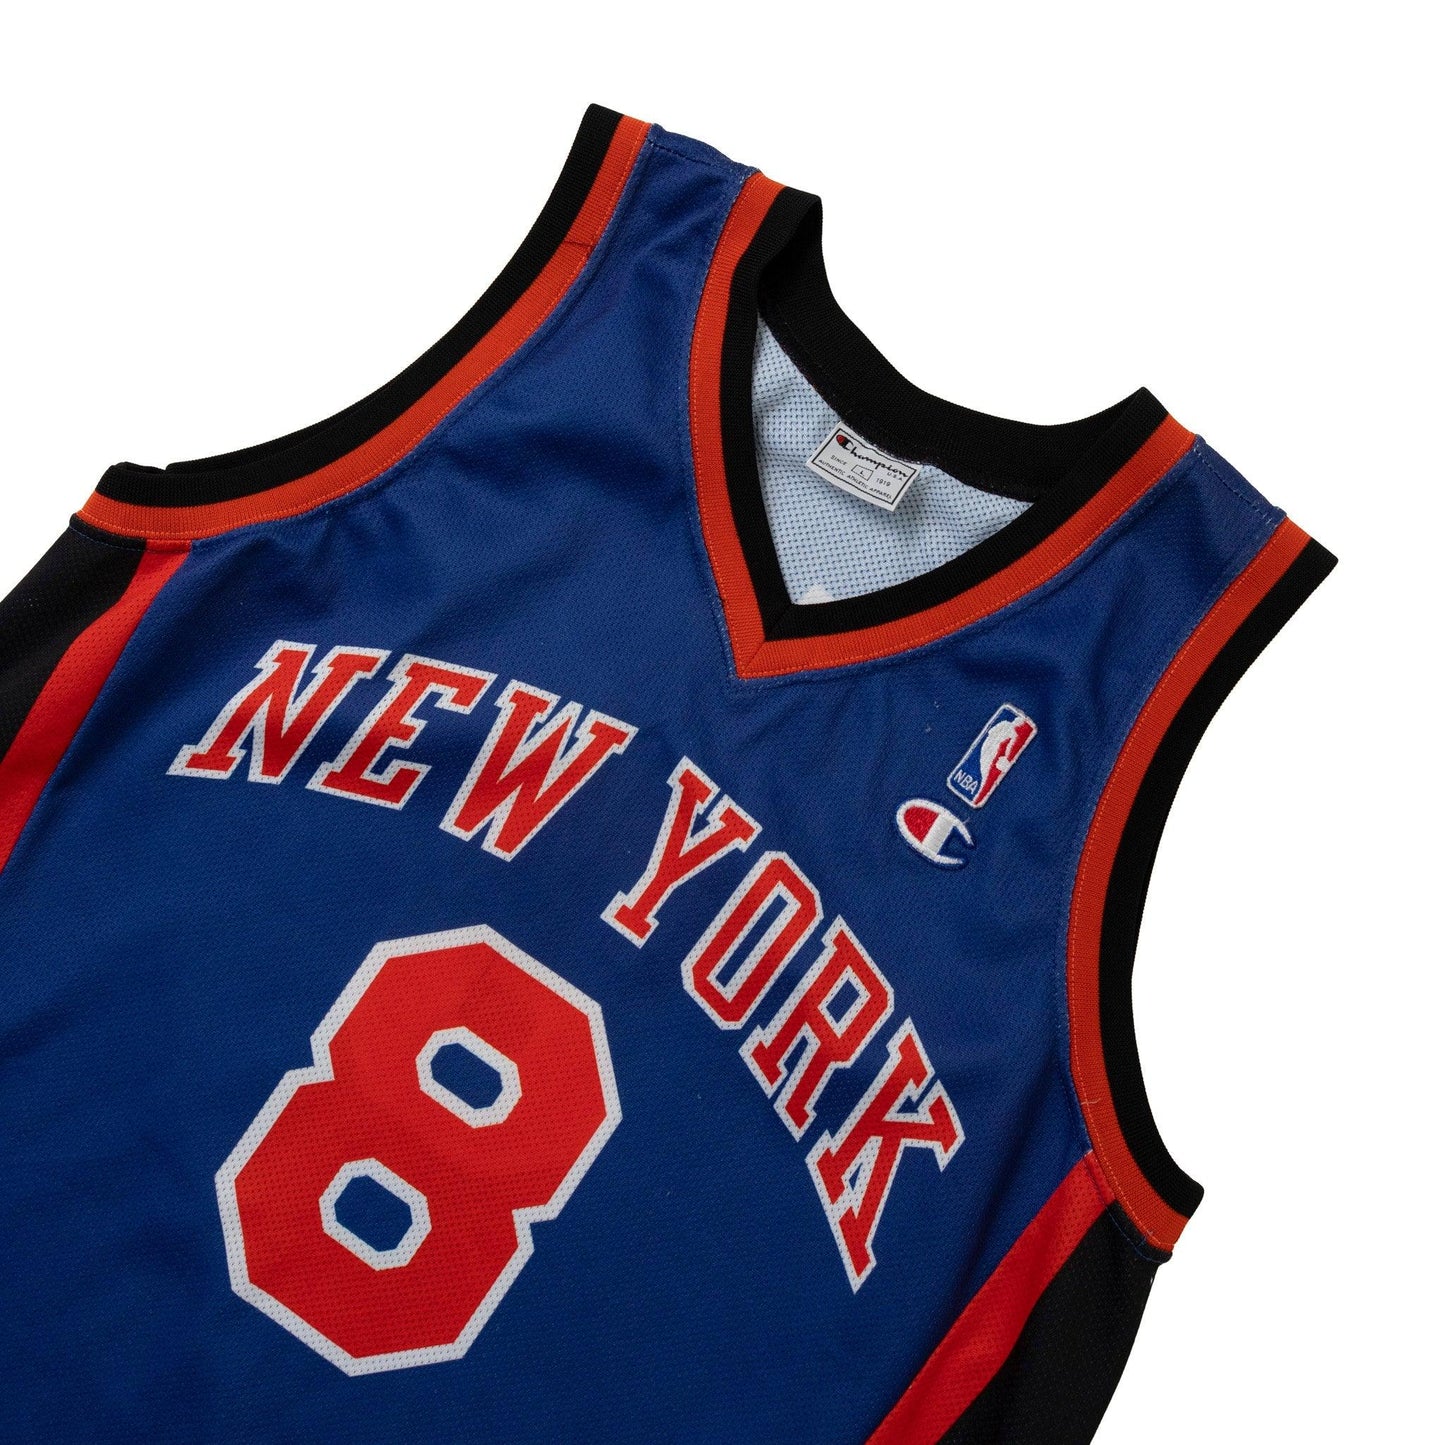 Champion New York Knicks Jersey 8 Latrell Sprewell Jersey - Known Source